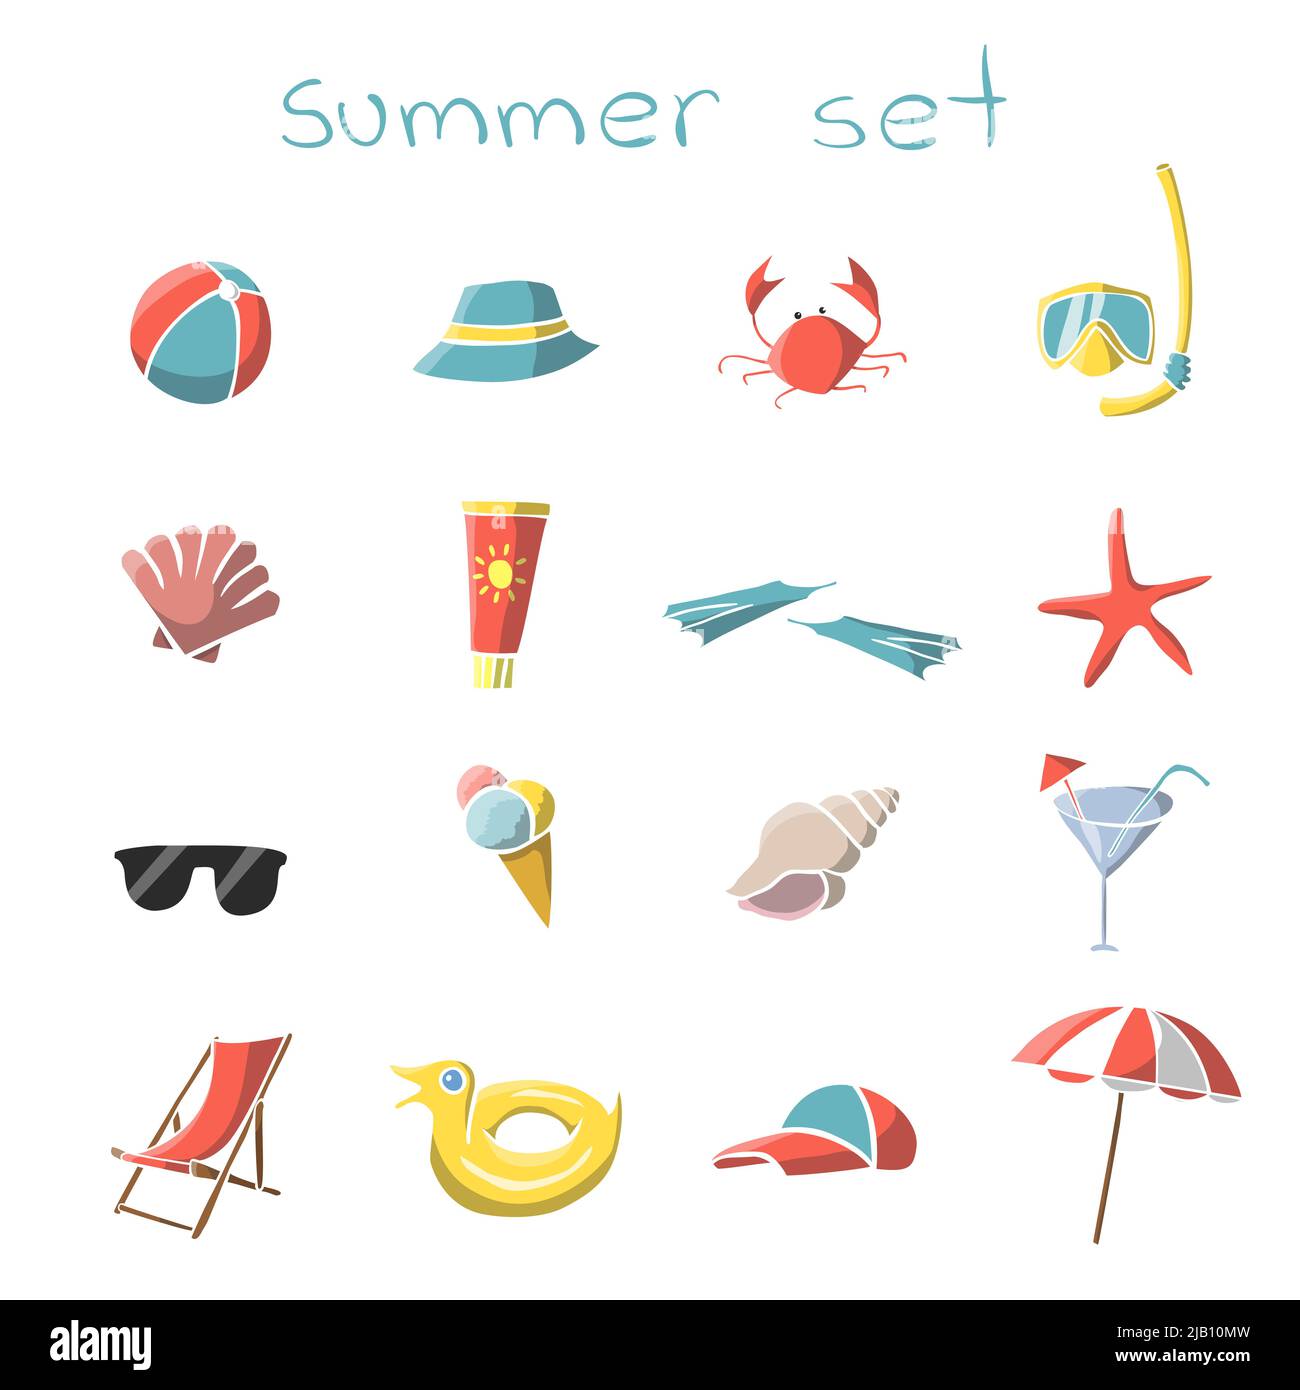 Sommer Urlaub Reise-Ikonen-Set Schnorchel Maske Krabbe Panama und Sonnenschirm isoliert Vektor-illustration Stock Vektor